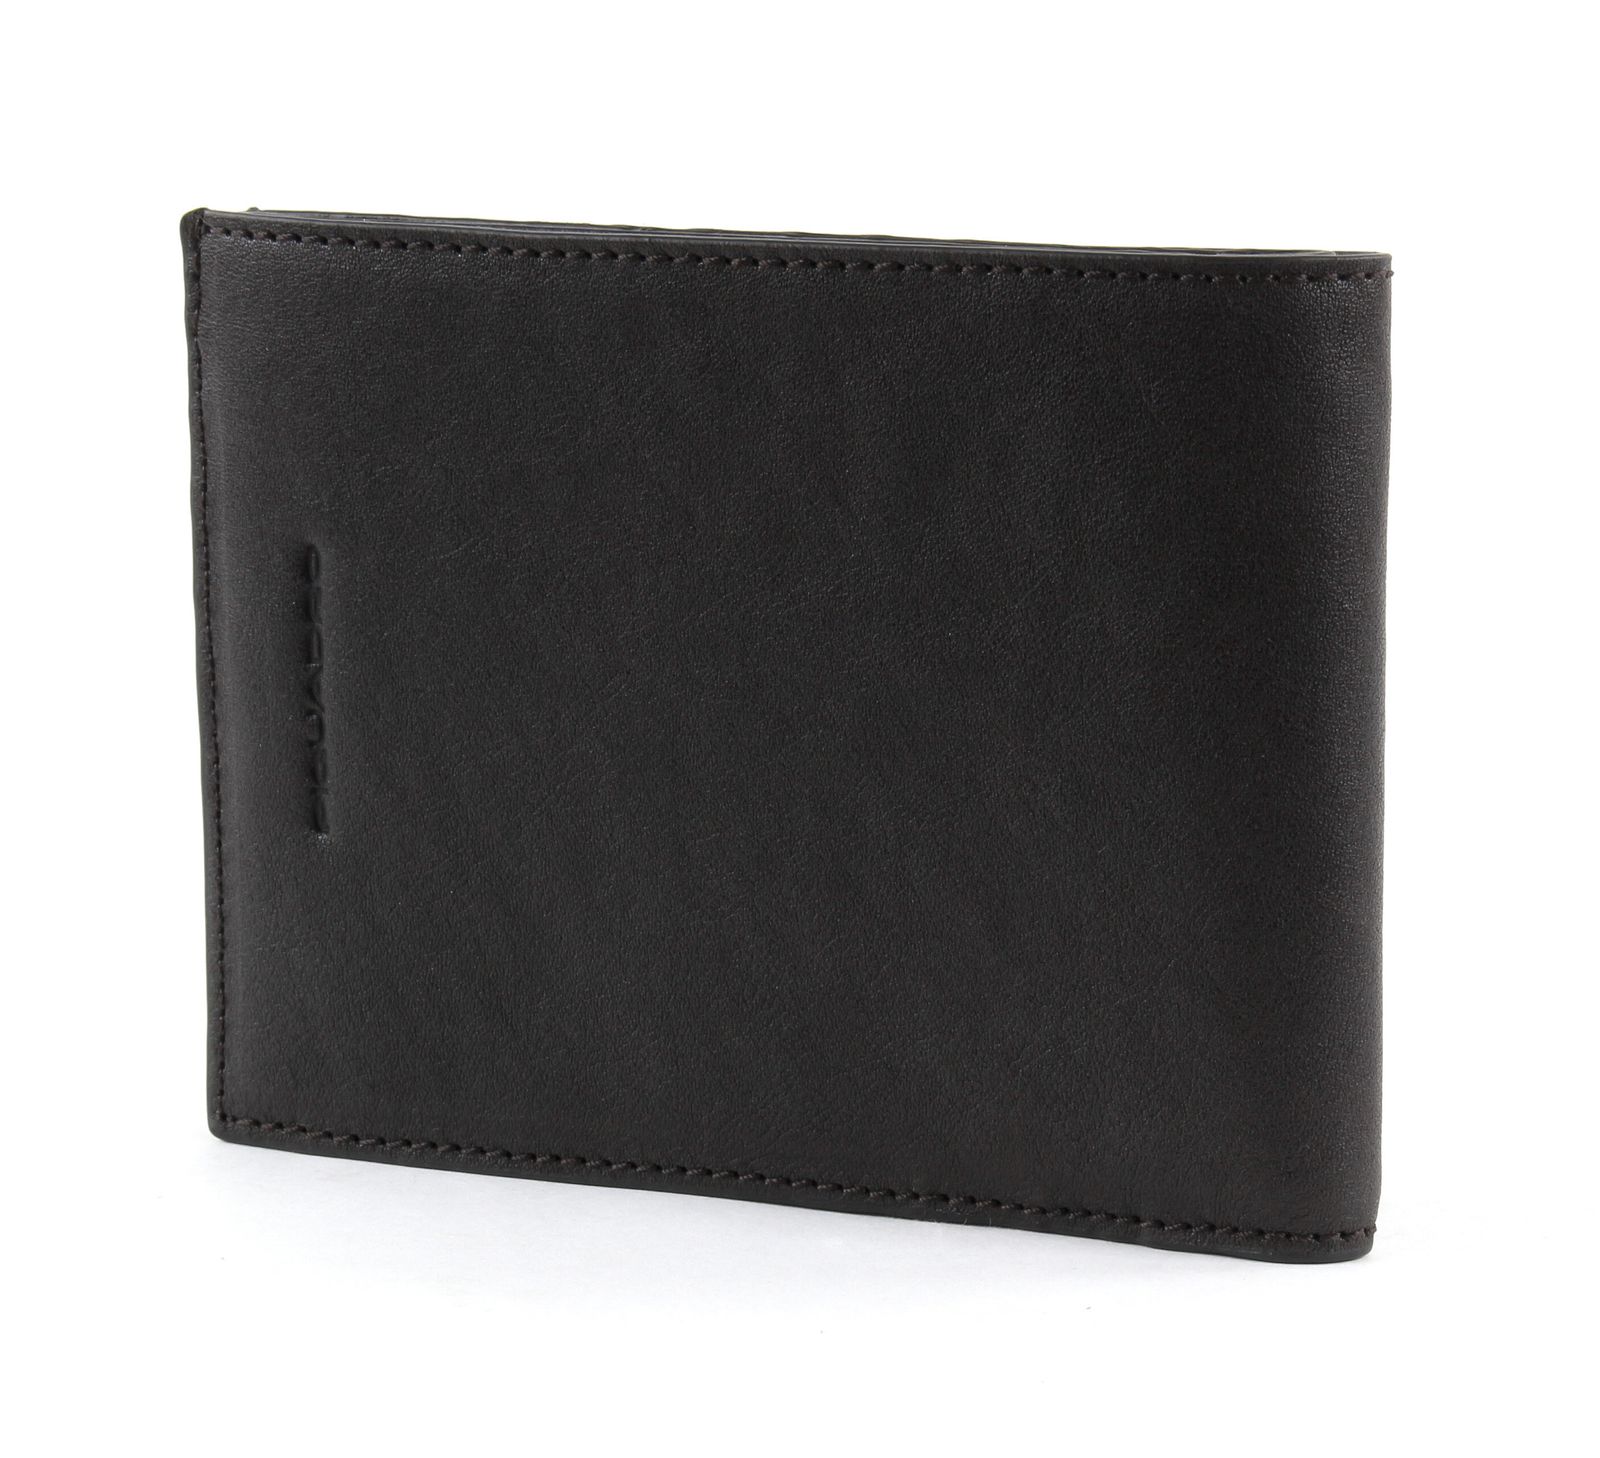 PIQUADRO Credit Card Case Black Square Holder Marron | Buy bags, purses ...